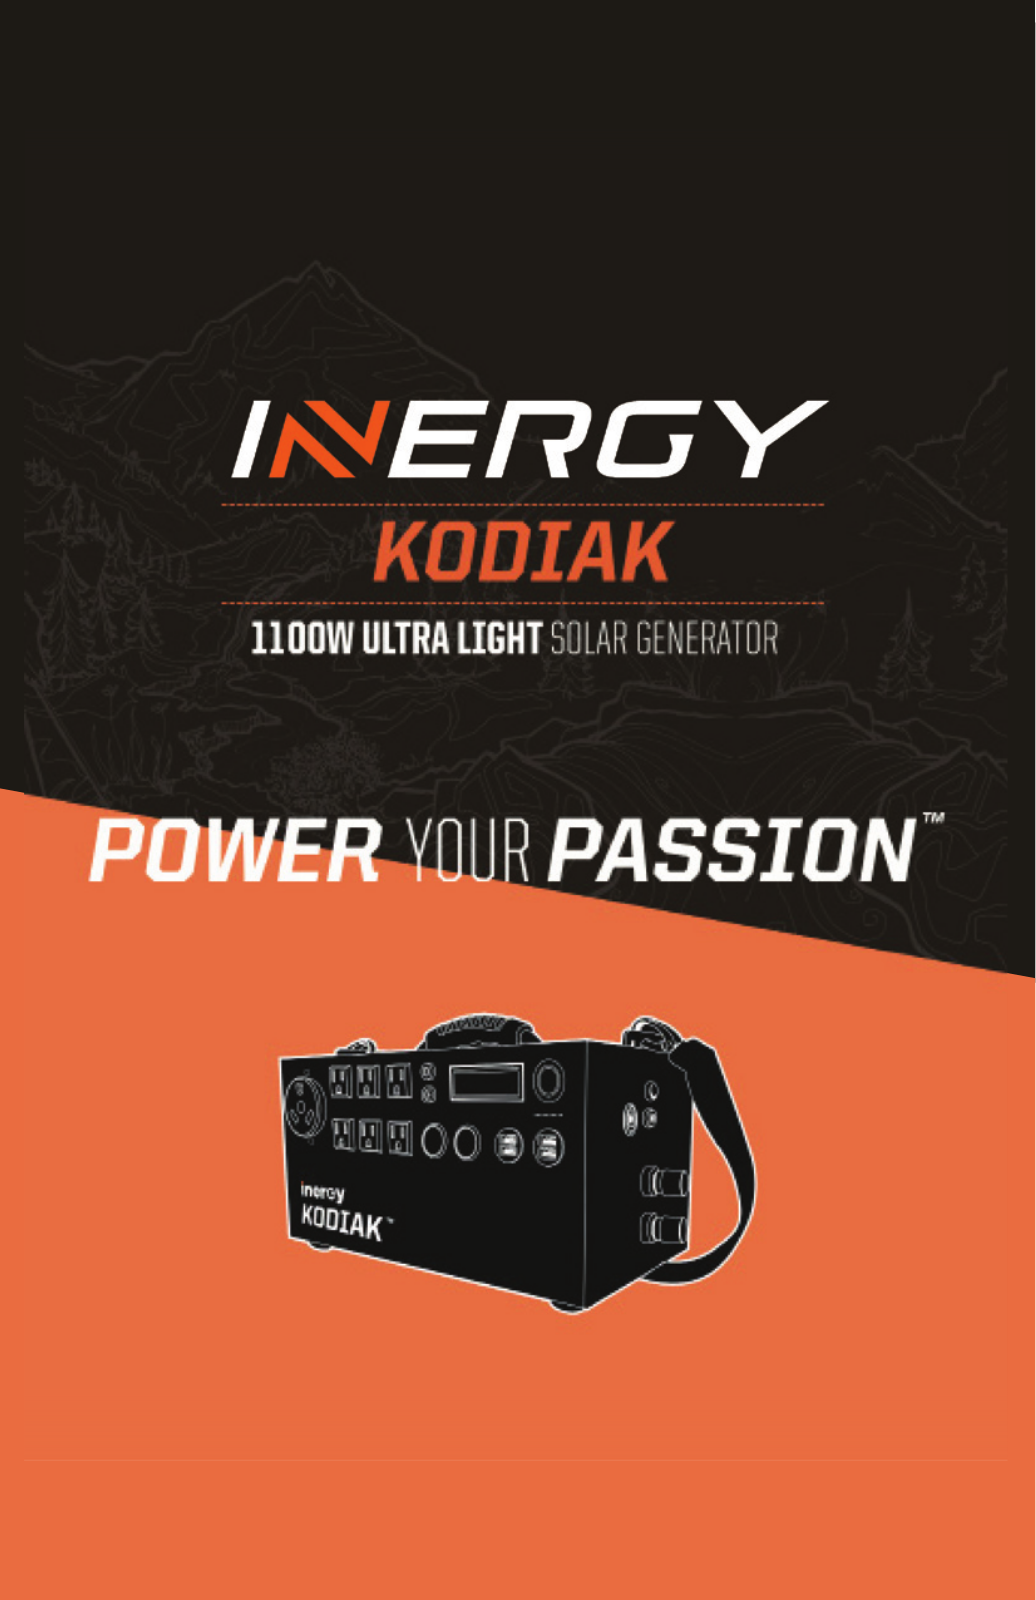 Inergy Kodiak User Manual